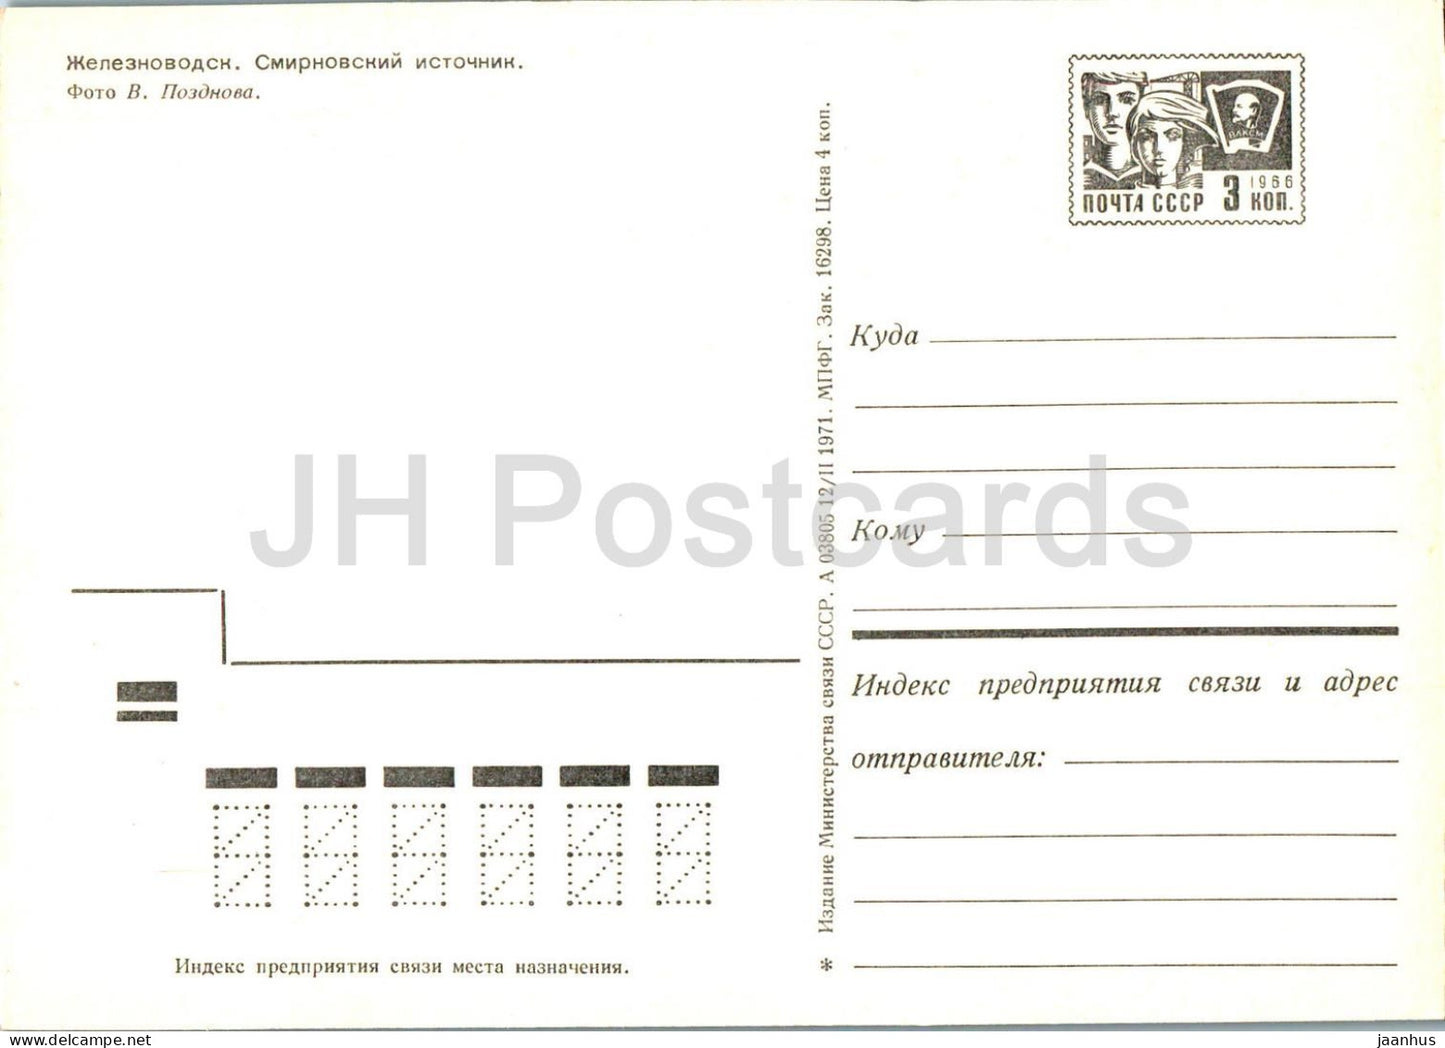 Jeleznovodsk - Source Smirnovsky - entier postal - 1971 - Russie URSS - inutilisé 